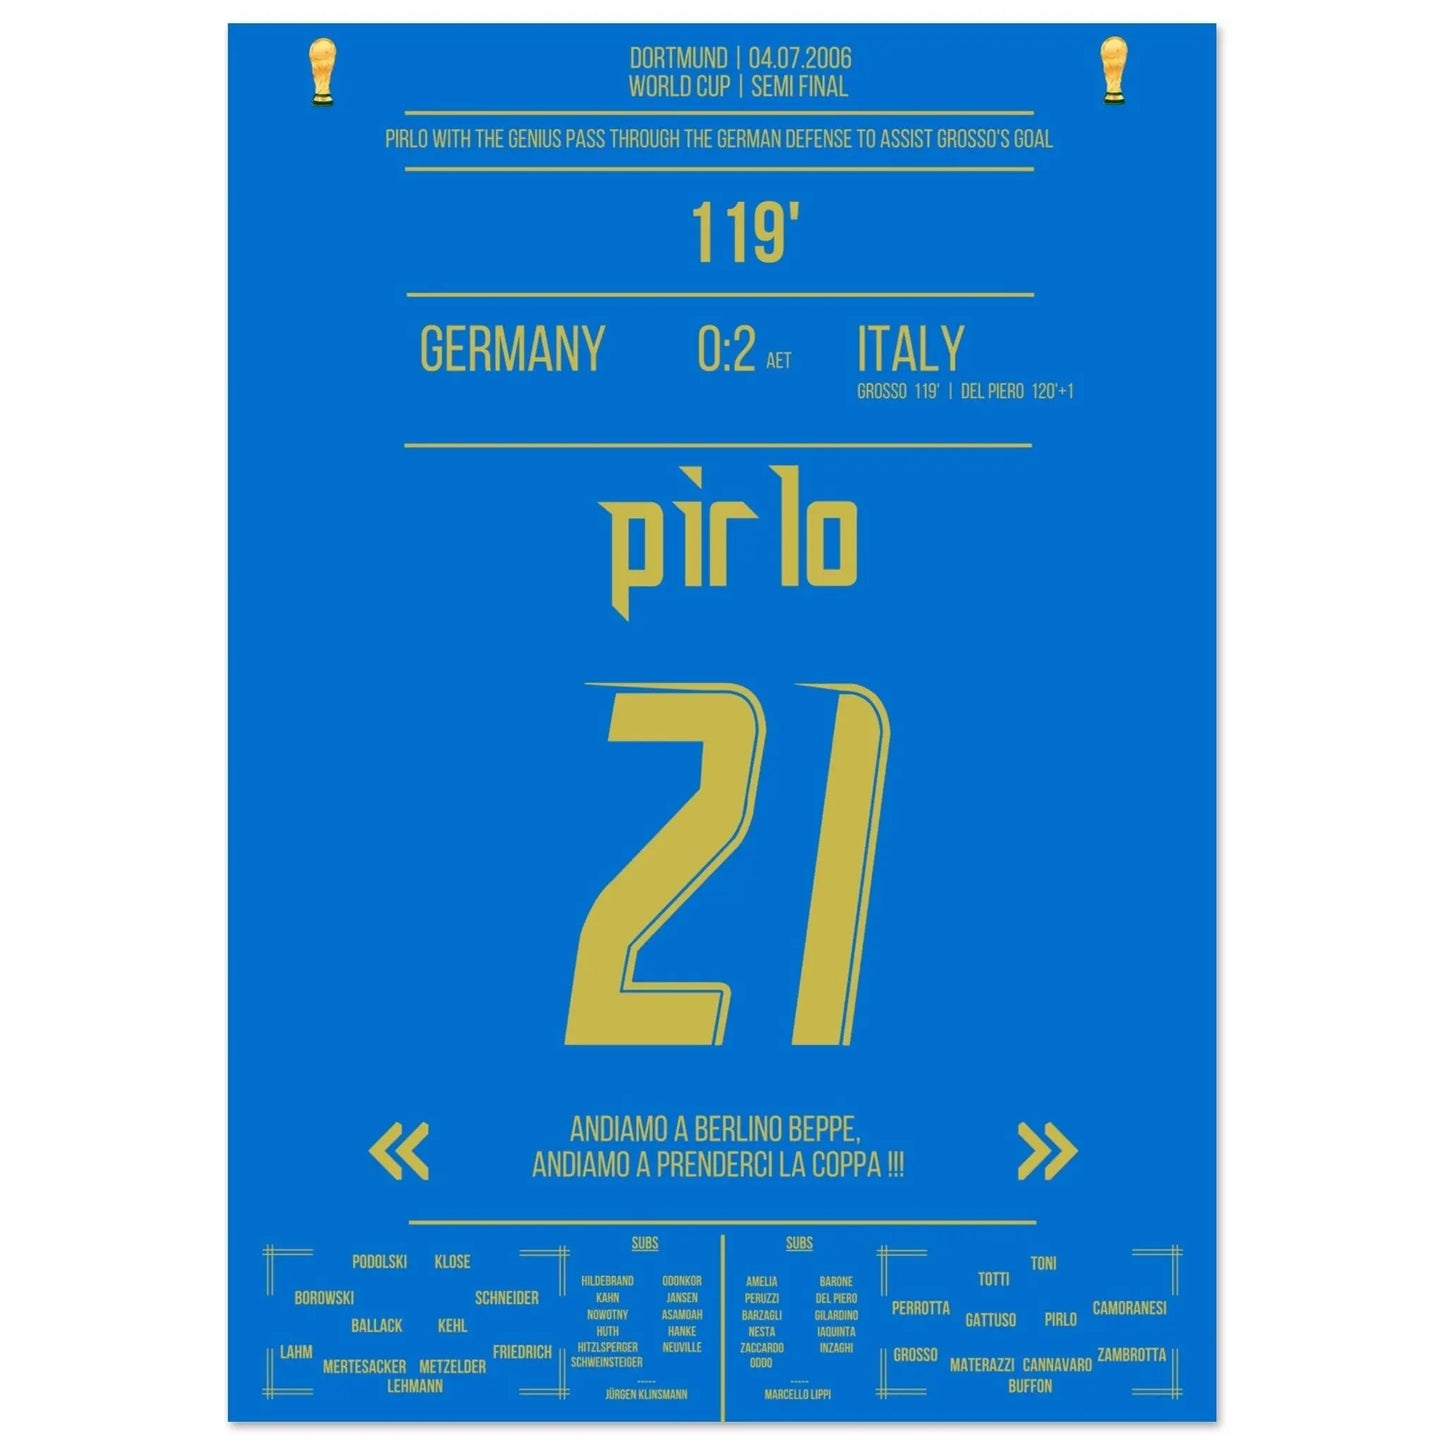 Pirlo's dream pass through the German defense to make it 1-0 through Grosso